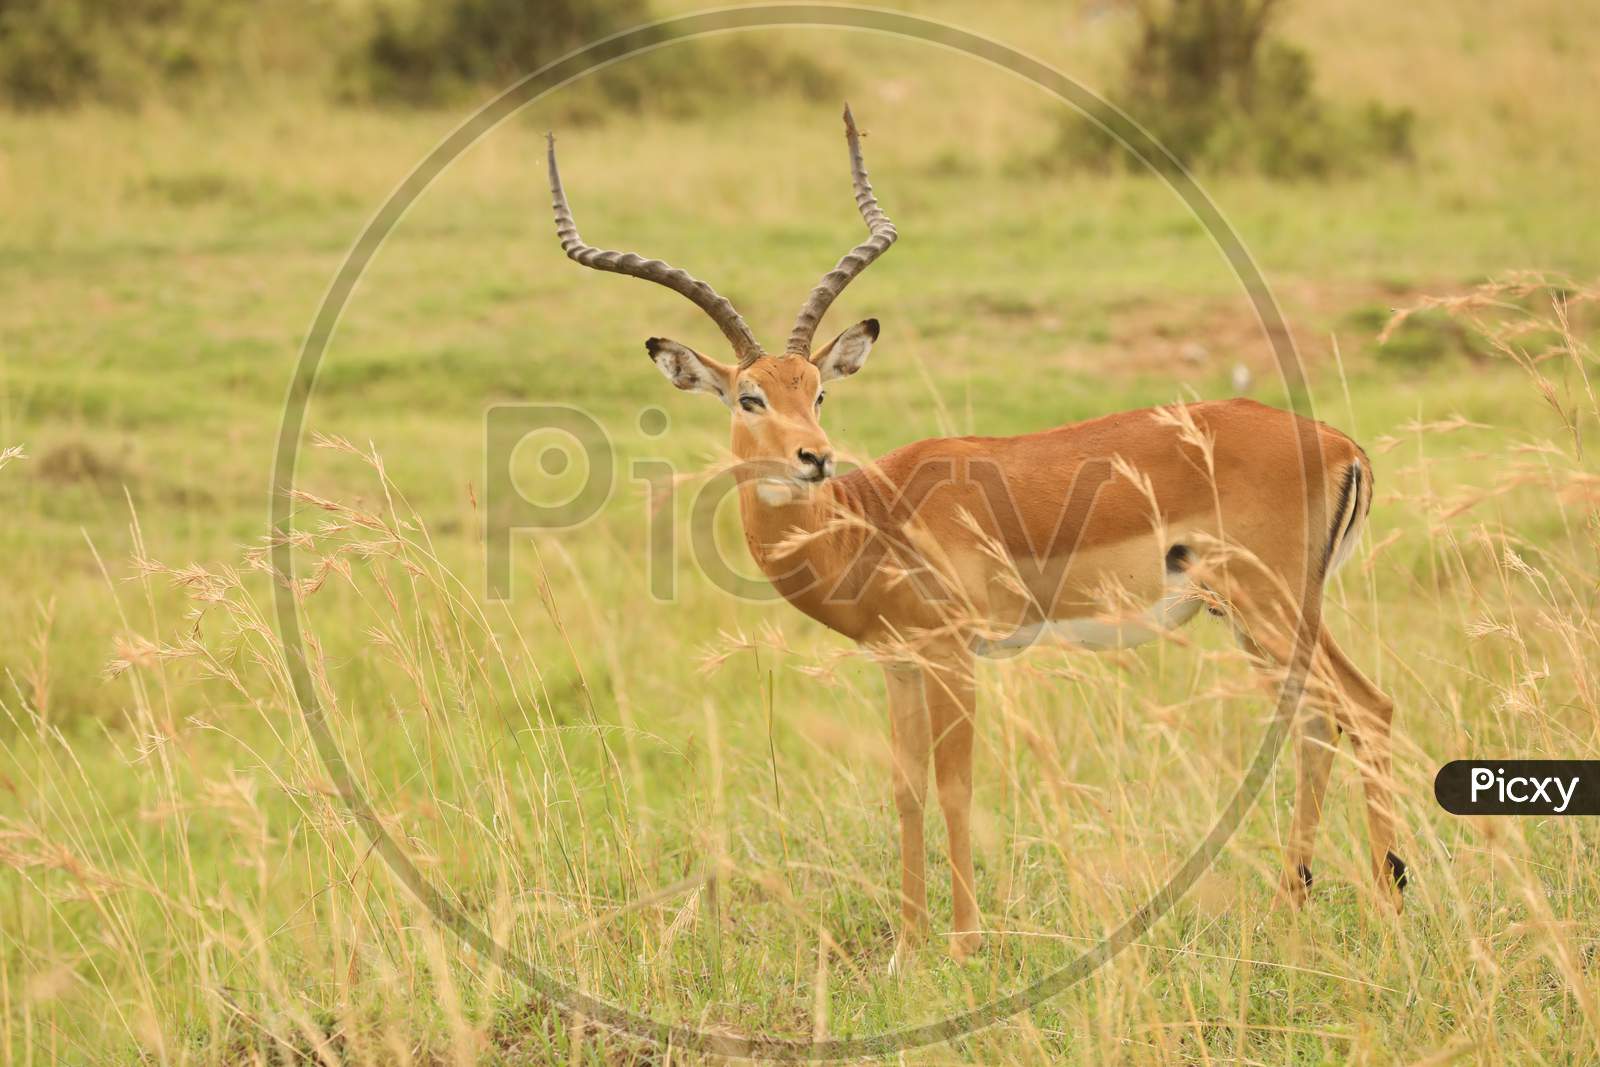 A Kenya Thomson's gazelle